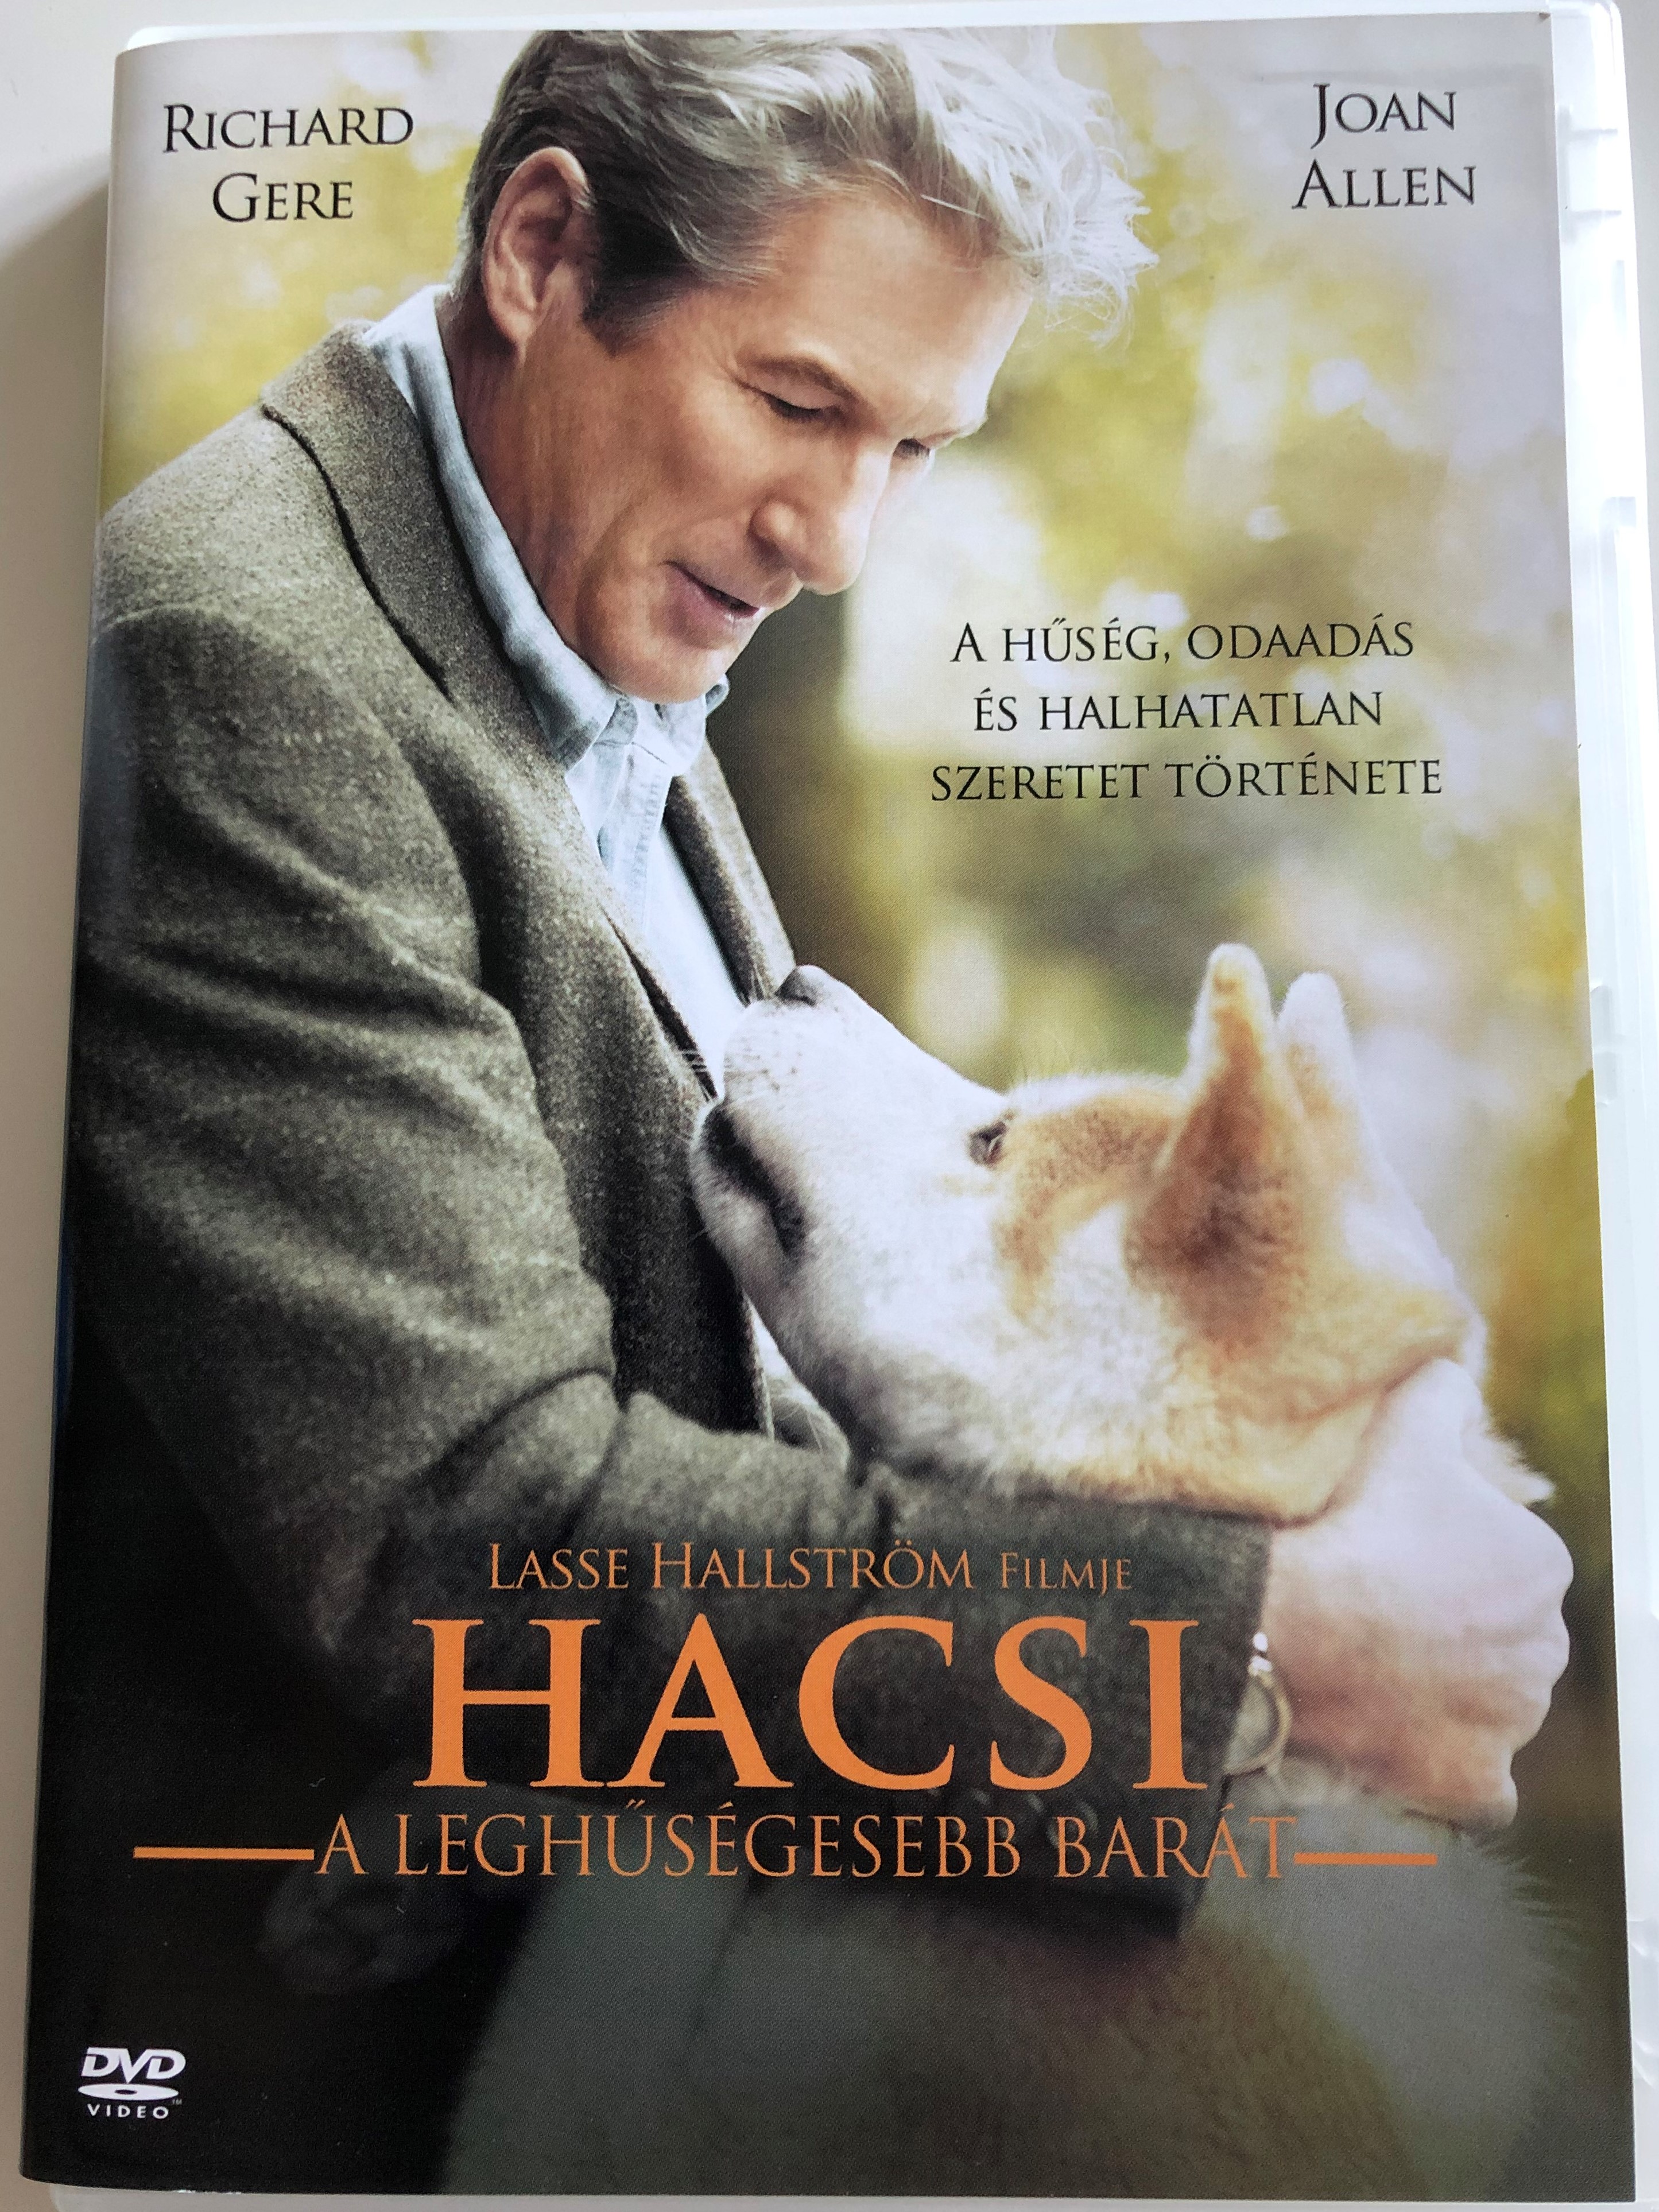 hachiko-a-dog-s-story-dvd-2008-hacsi-a-legh-s-gesebb-bar-t-directed-by-lasse-hallstrom-starring-richard-gere-joan-allen-1-.jpg